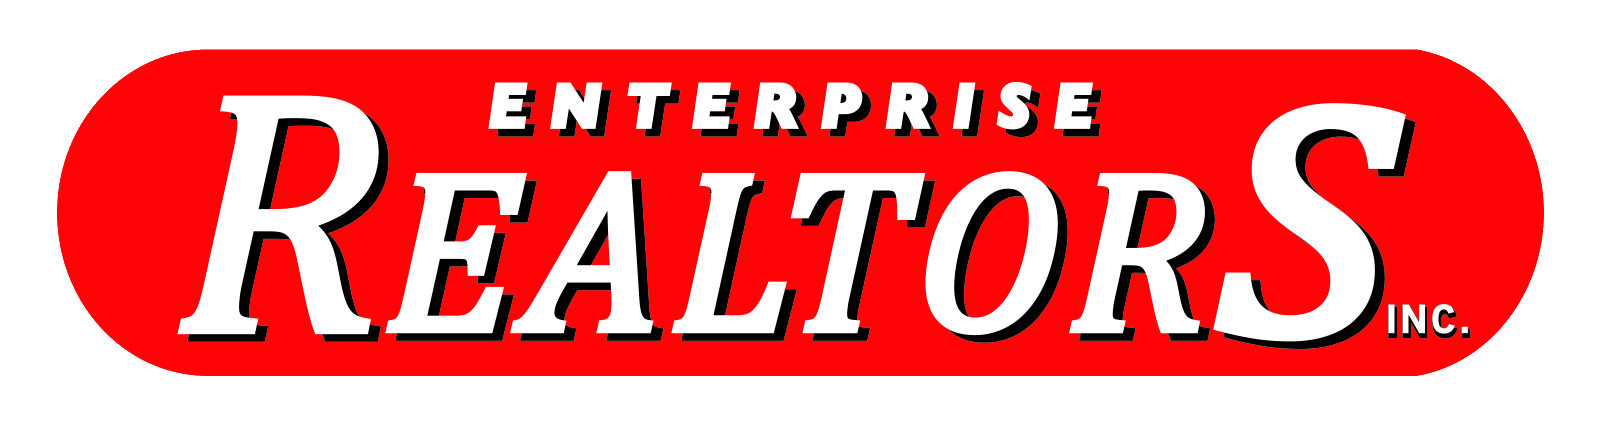 Enterprise Realtors